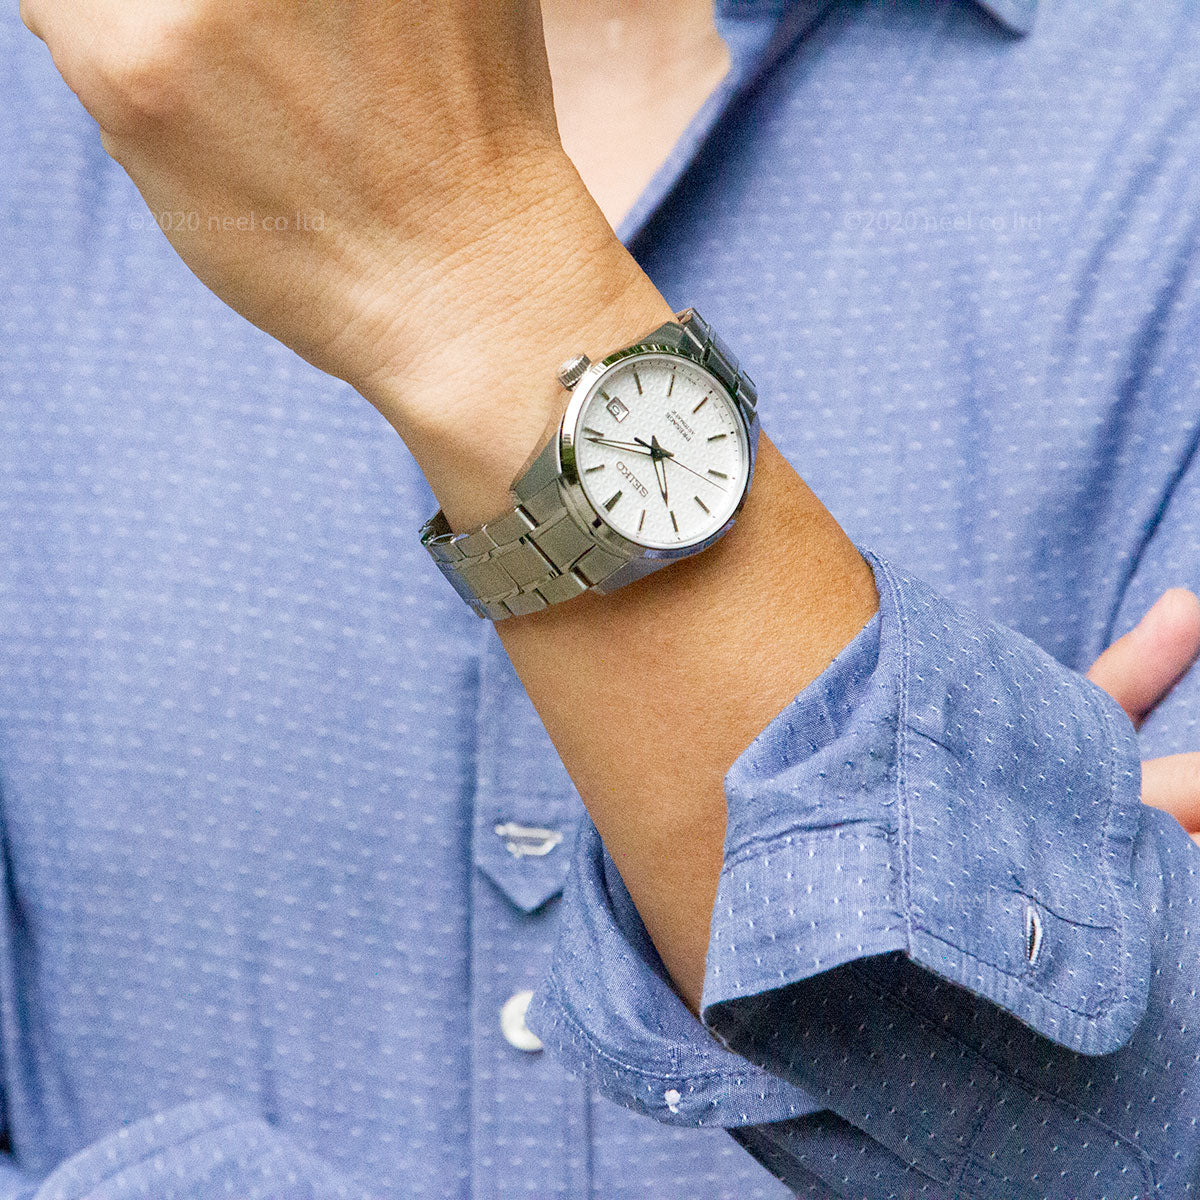 SEIKO  プレザージュ シャープエッジ SARX075白文字盤 自動巻腕時計商品状態